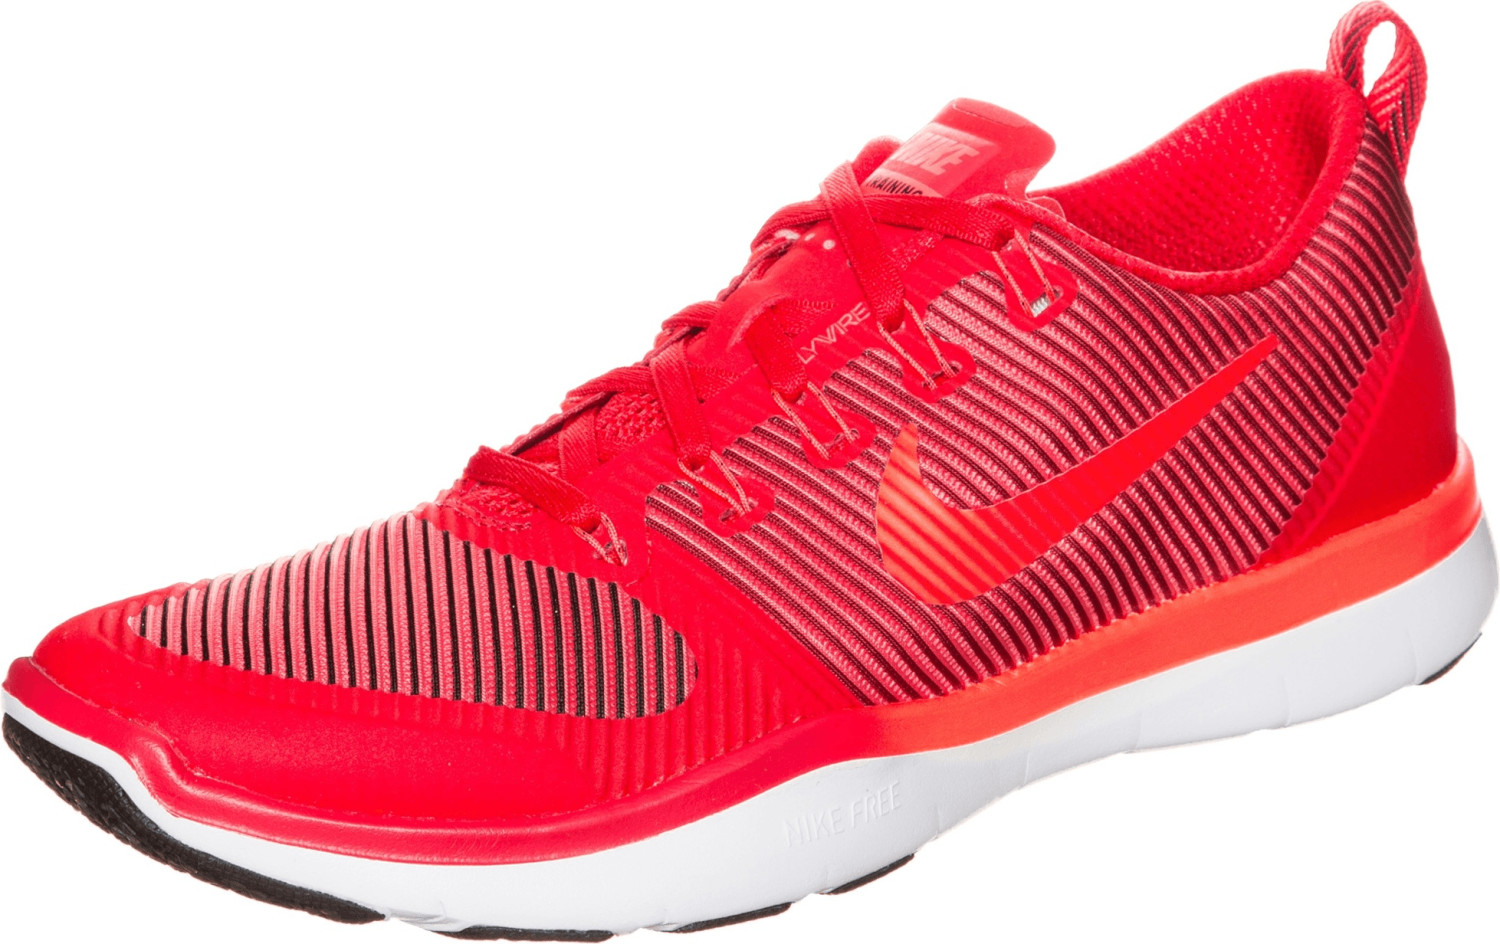 Nike Free Train Versatility bright crimson/black/gym red